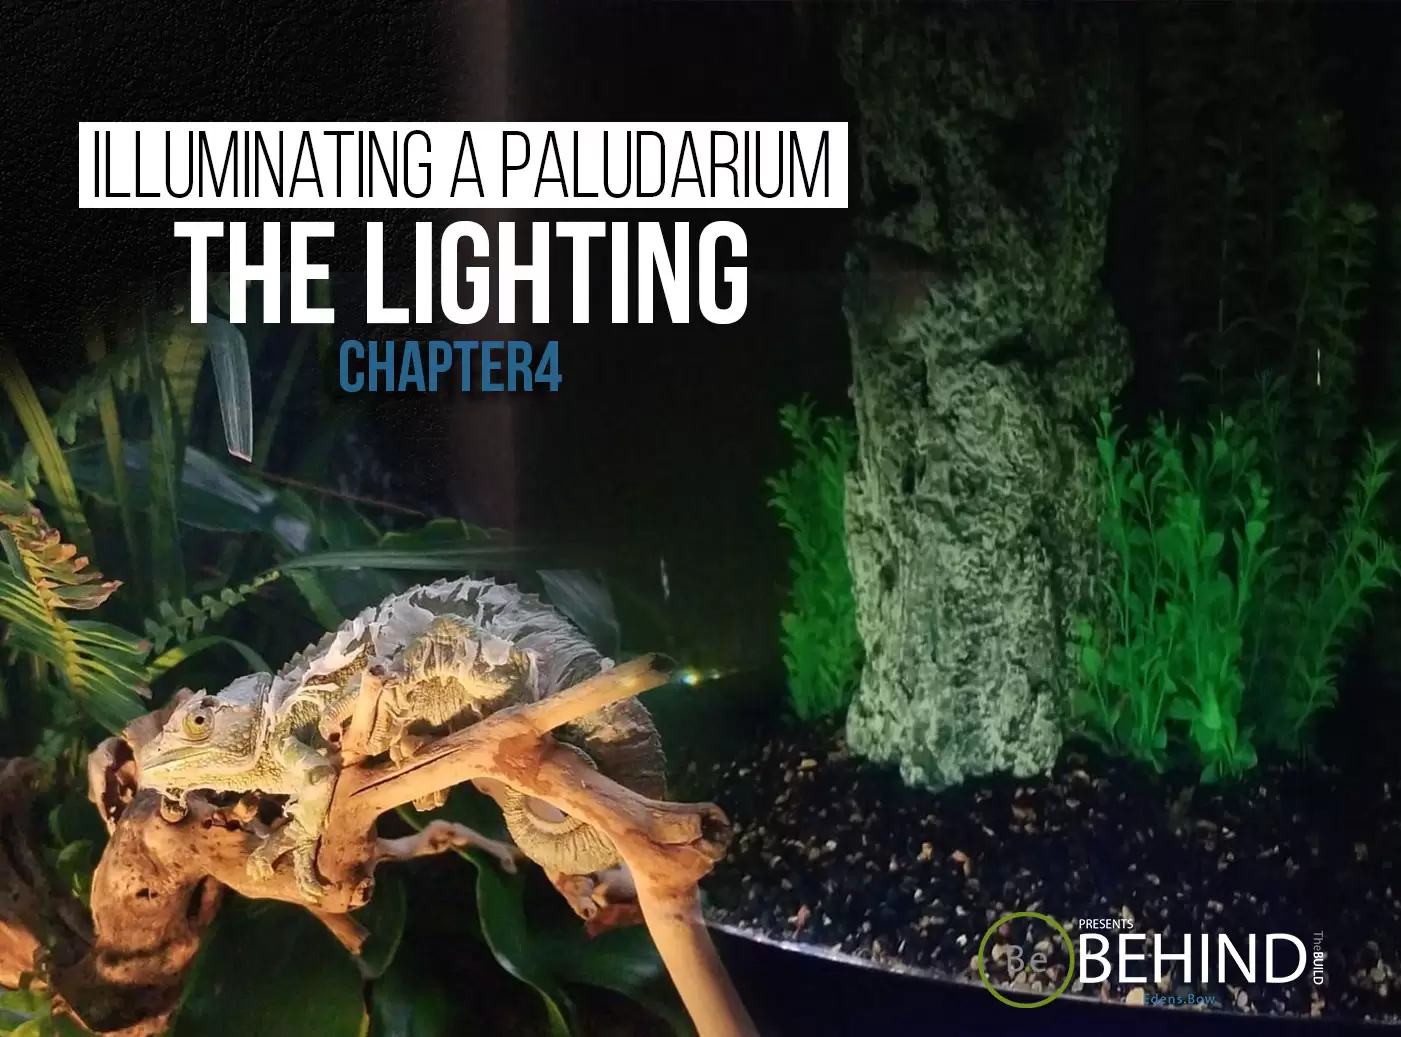 BEHINDtheBUILD chapter 4 illuminating a paludarium